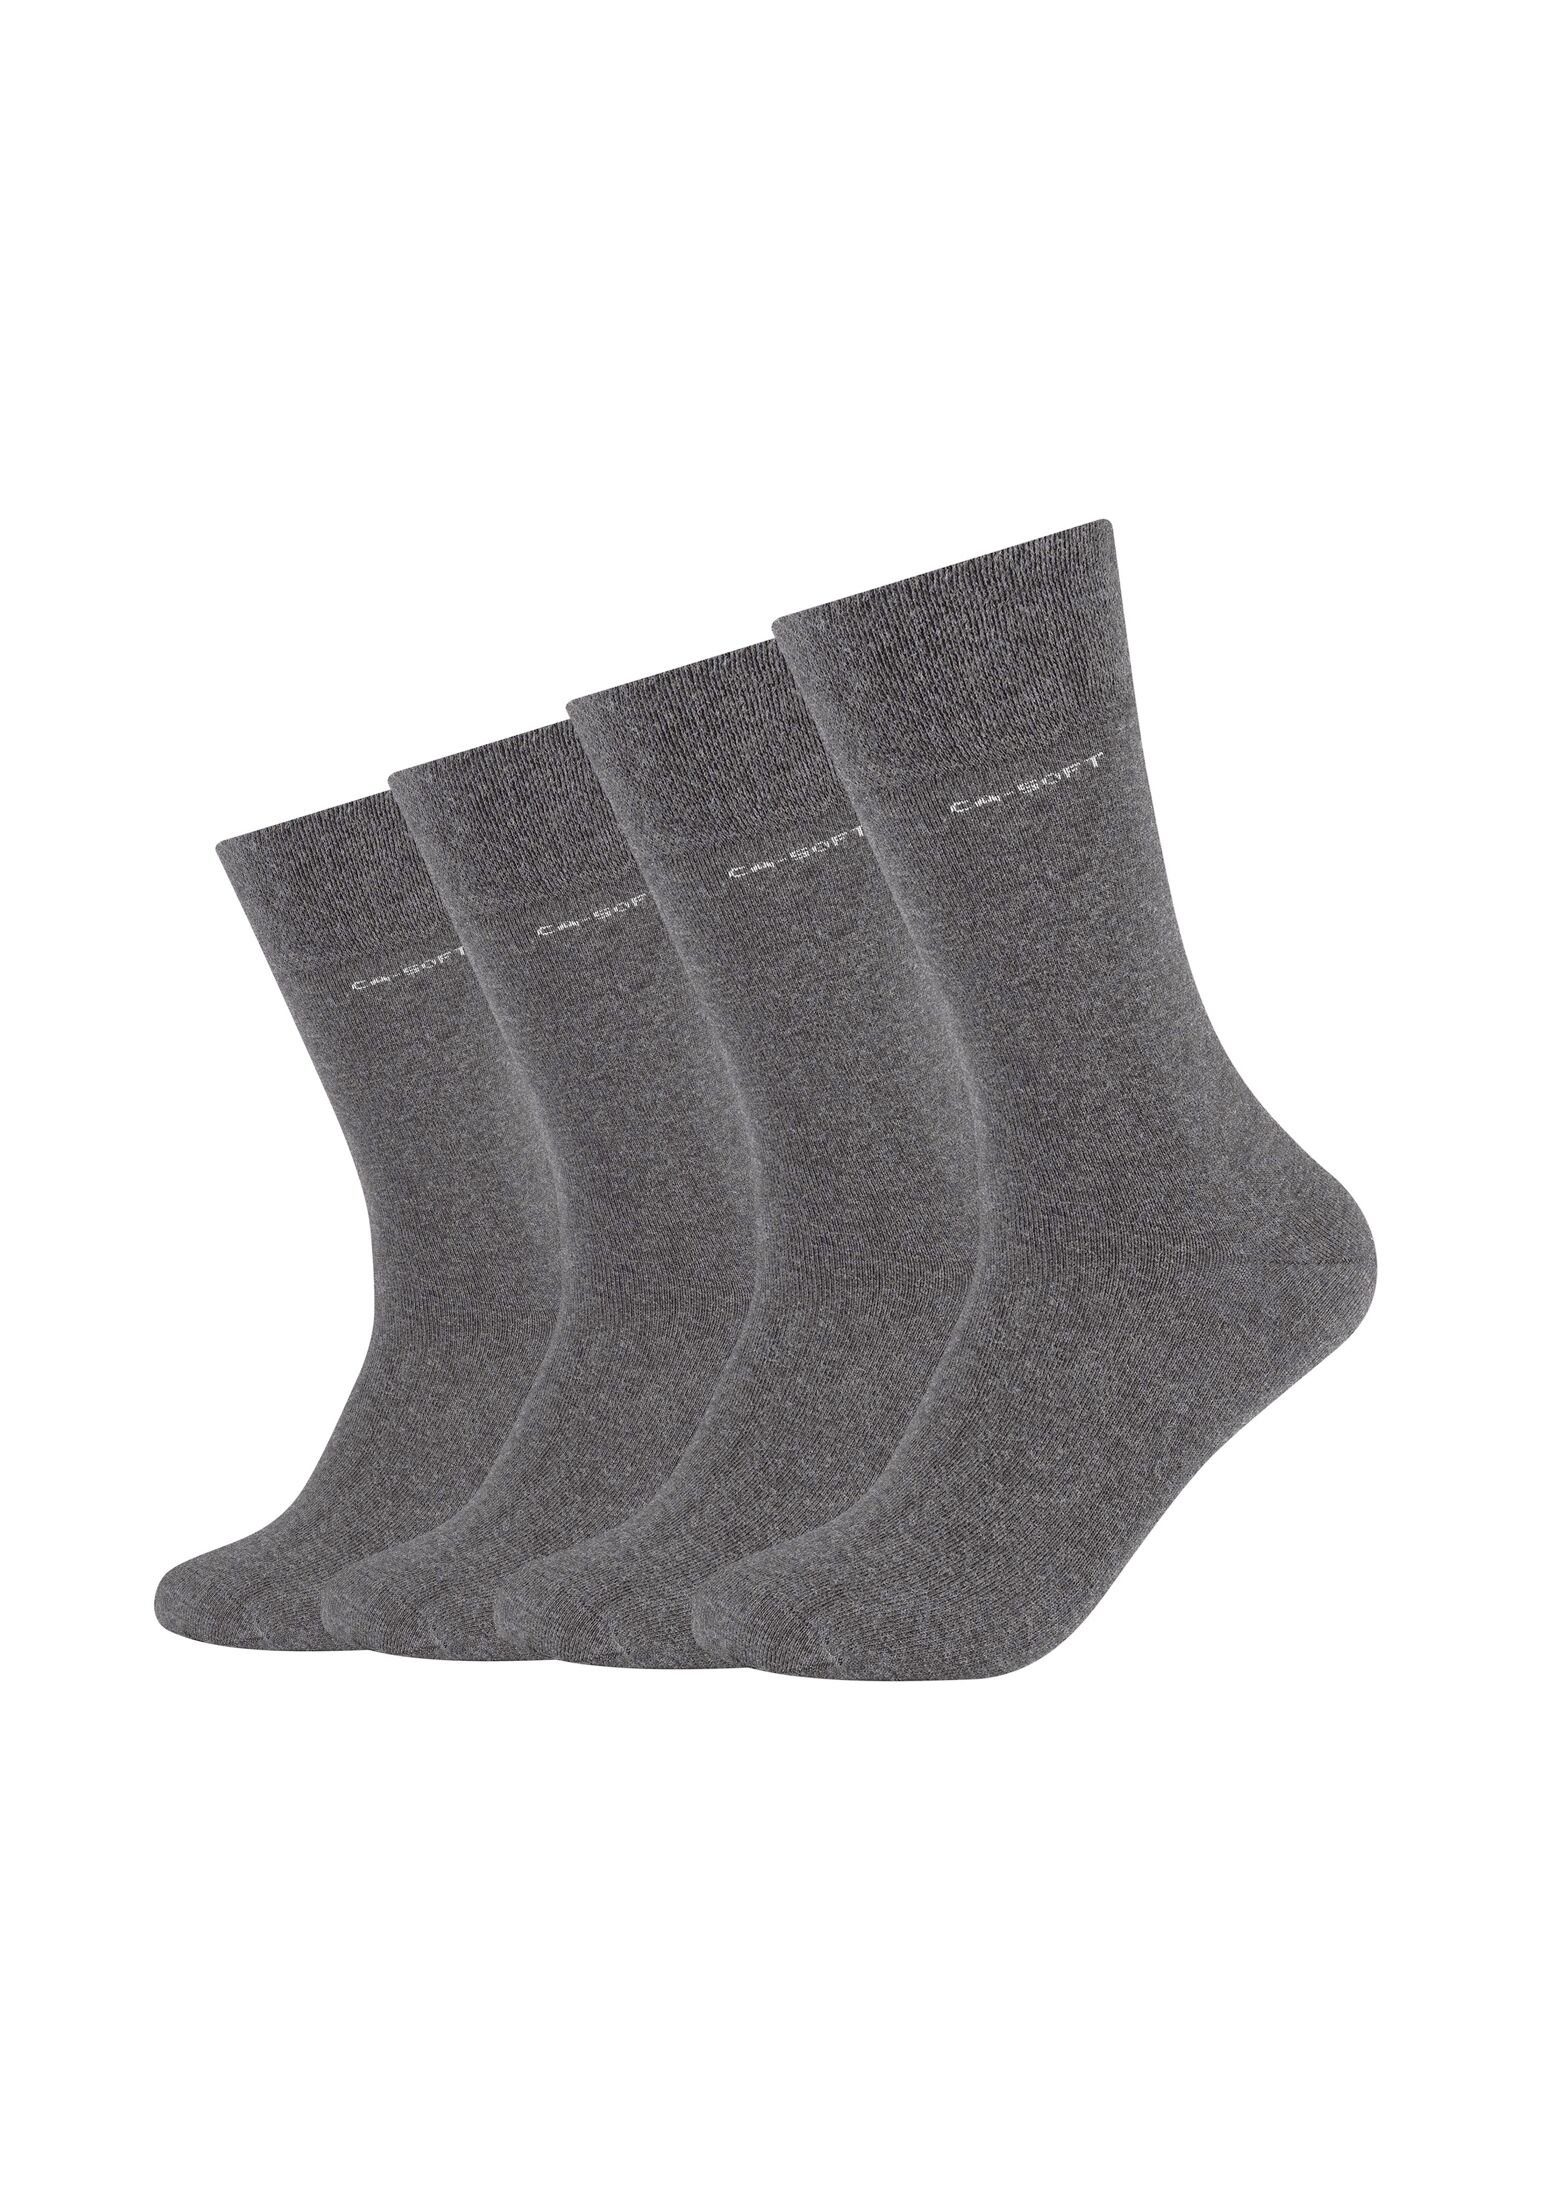 Camano Socken Socken 4er Pack dark grey melange